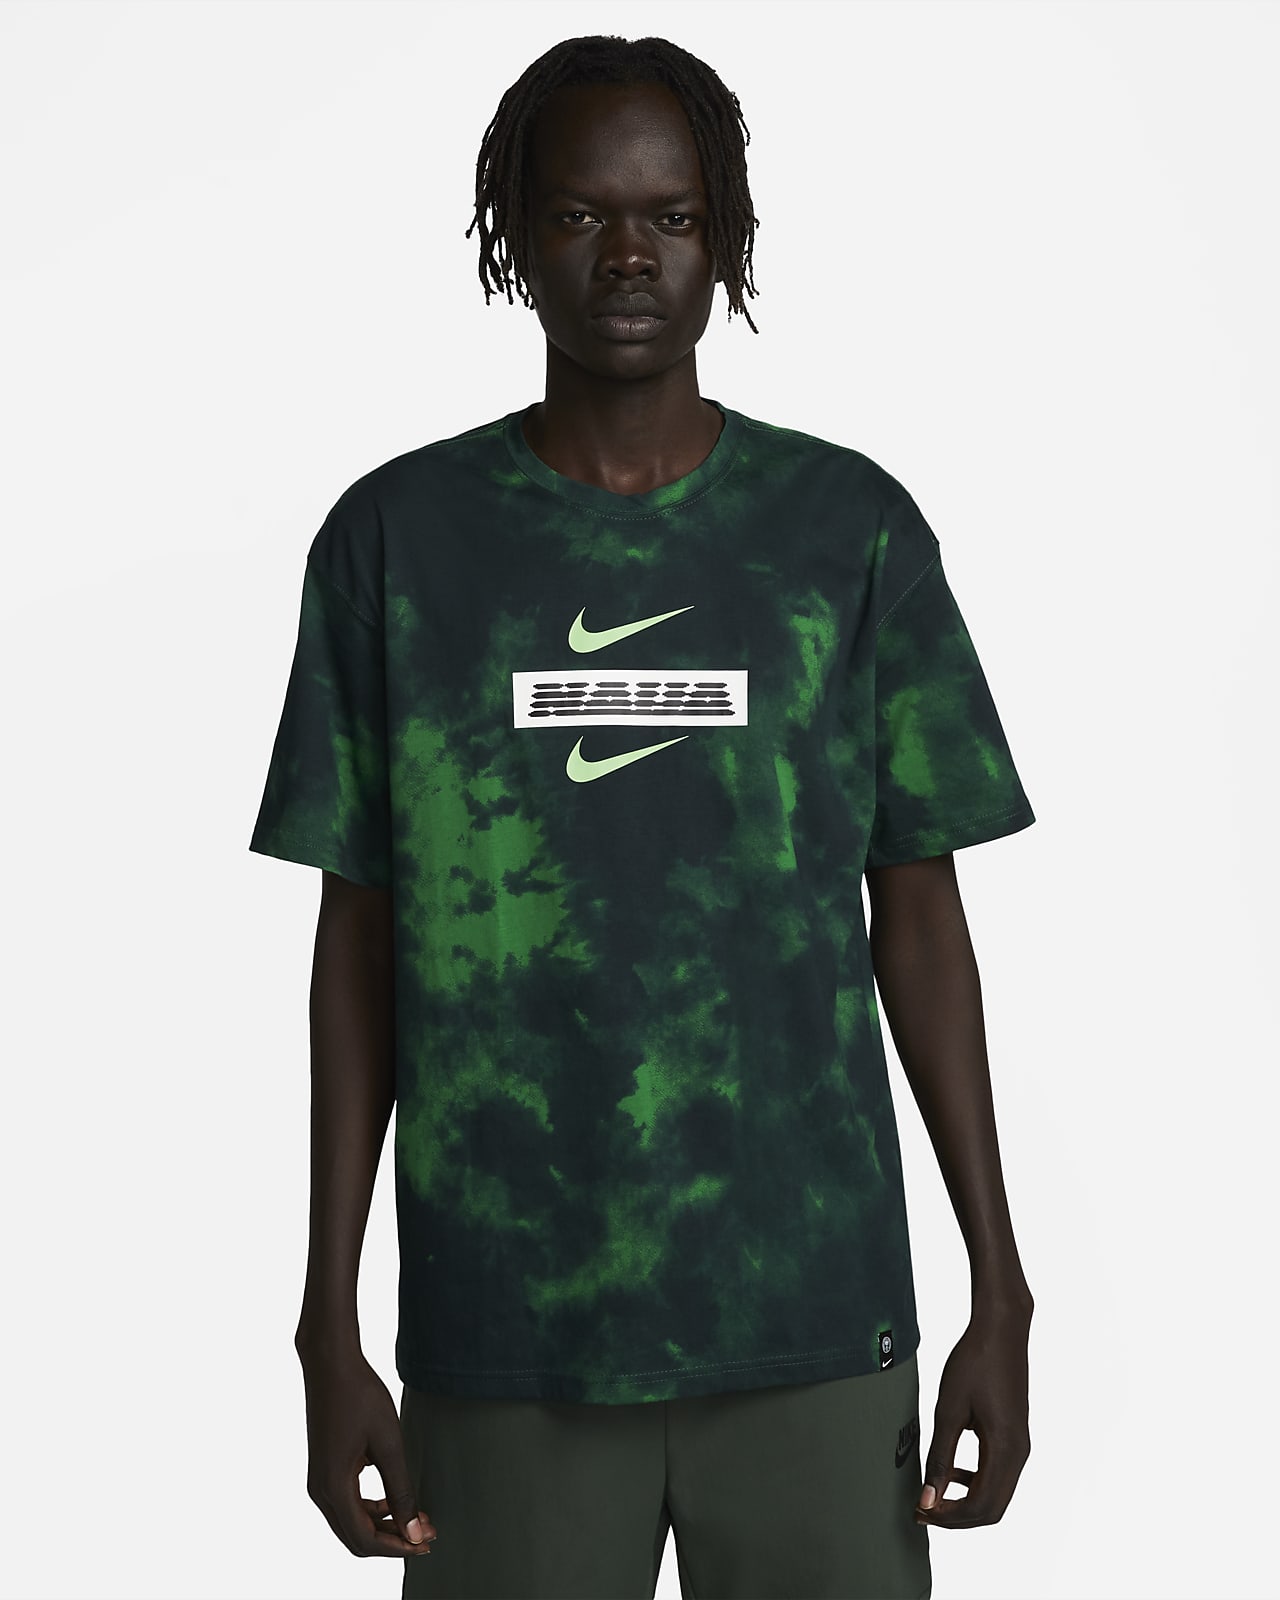 Nigeria Men's Nike Ignite T-Shirt.